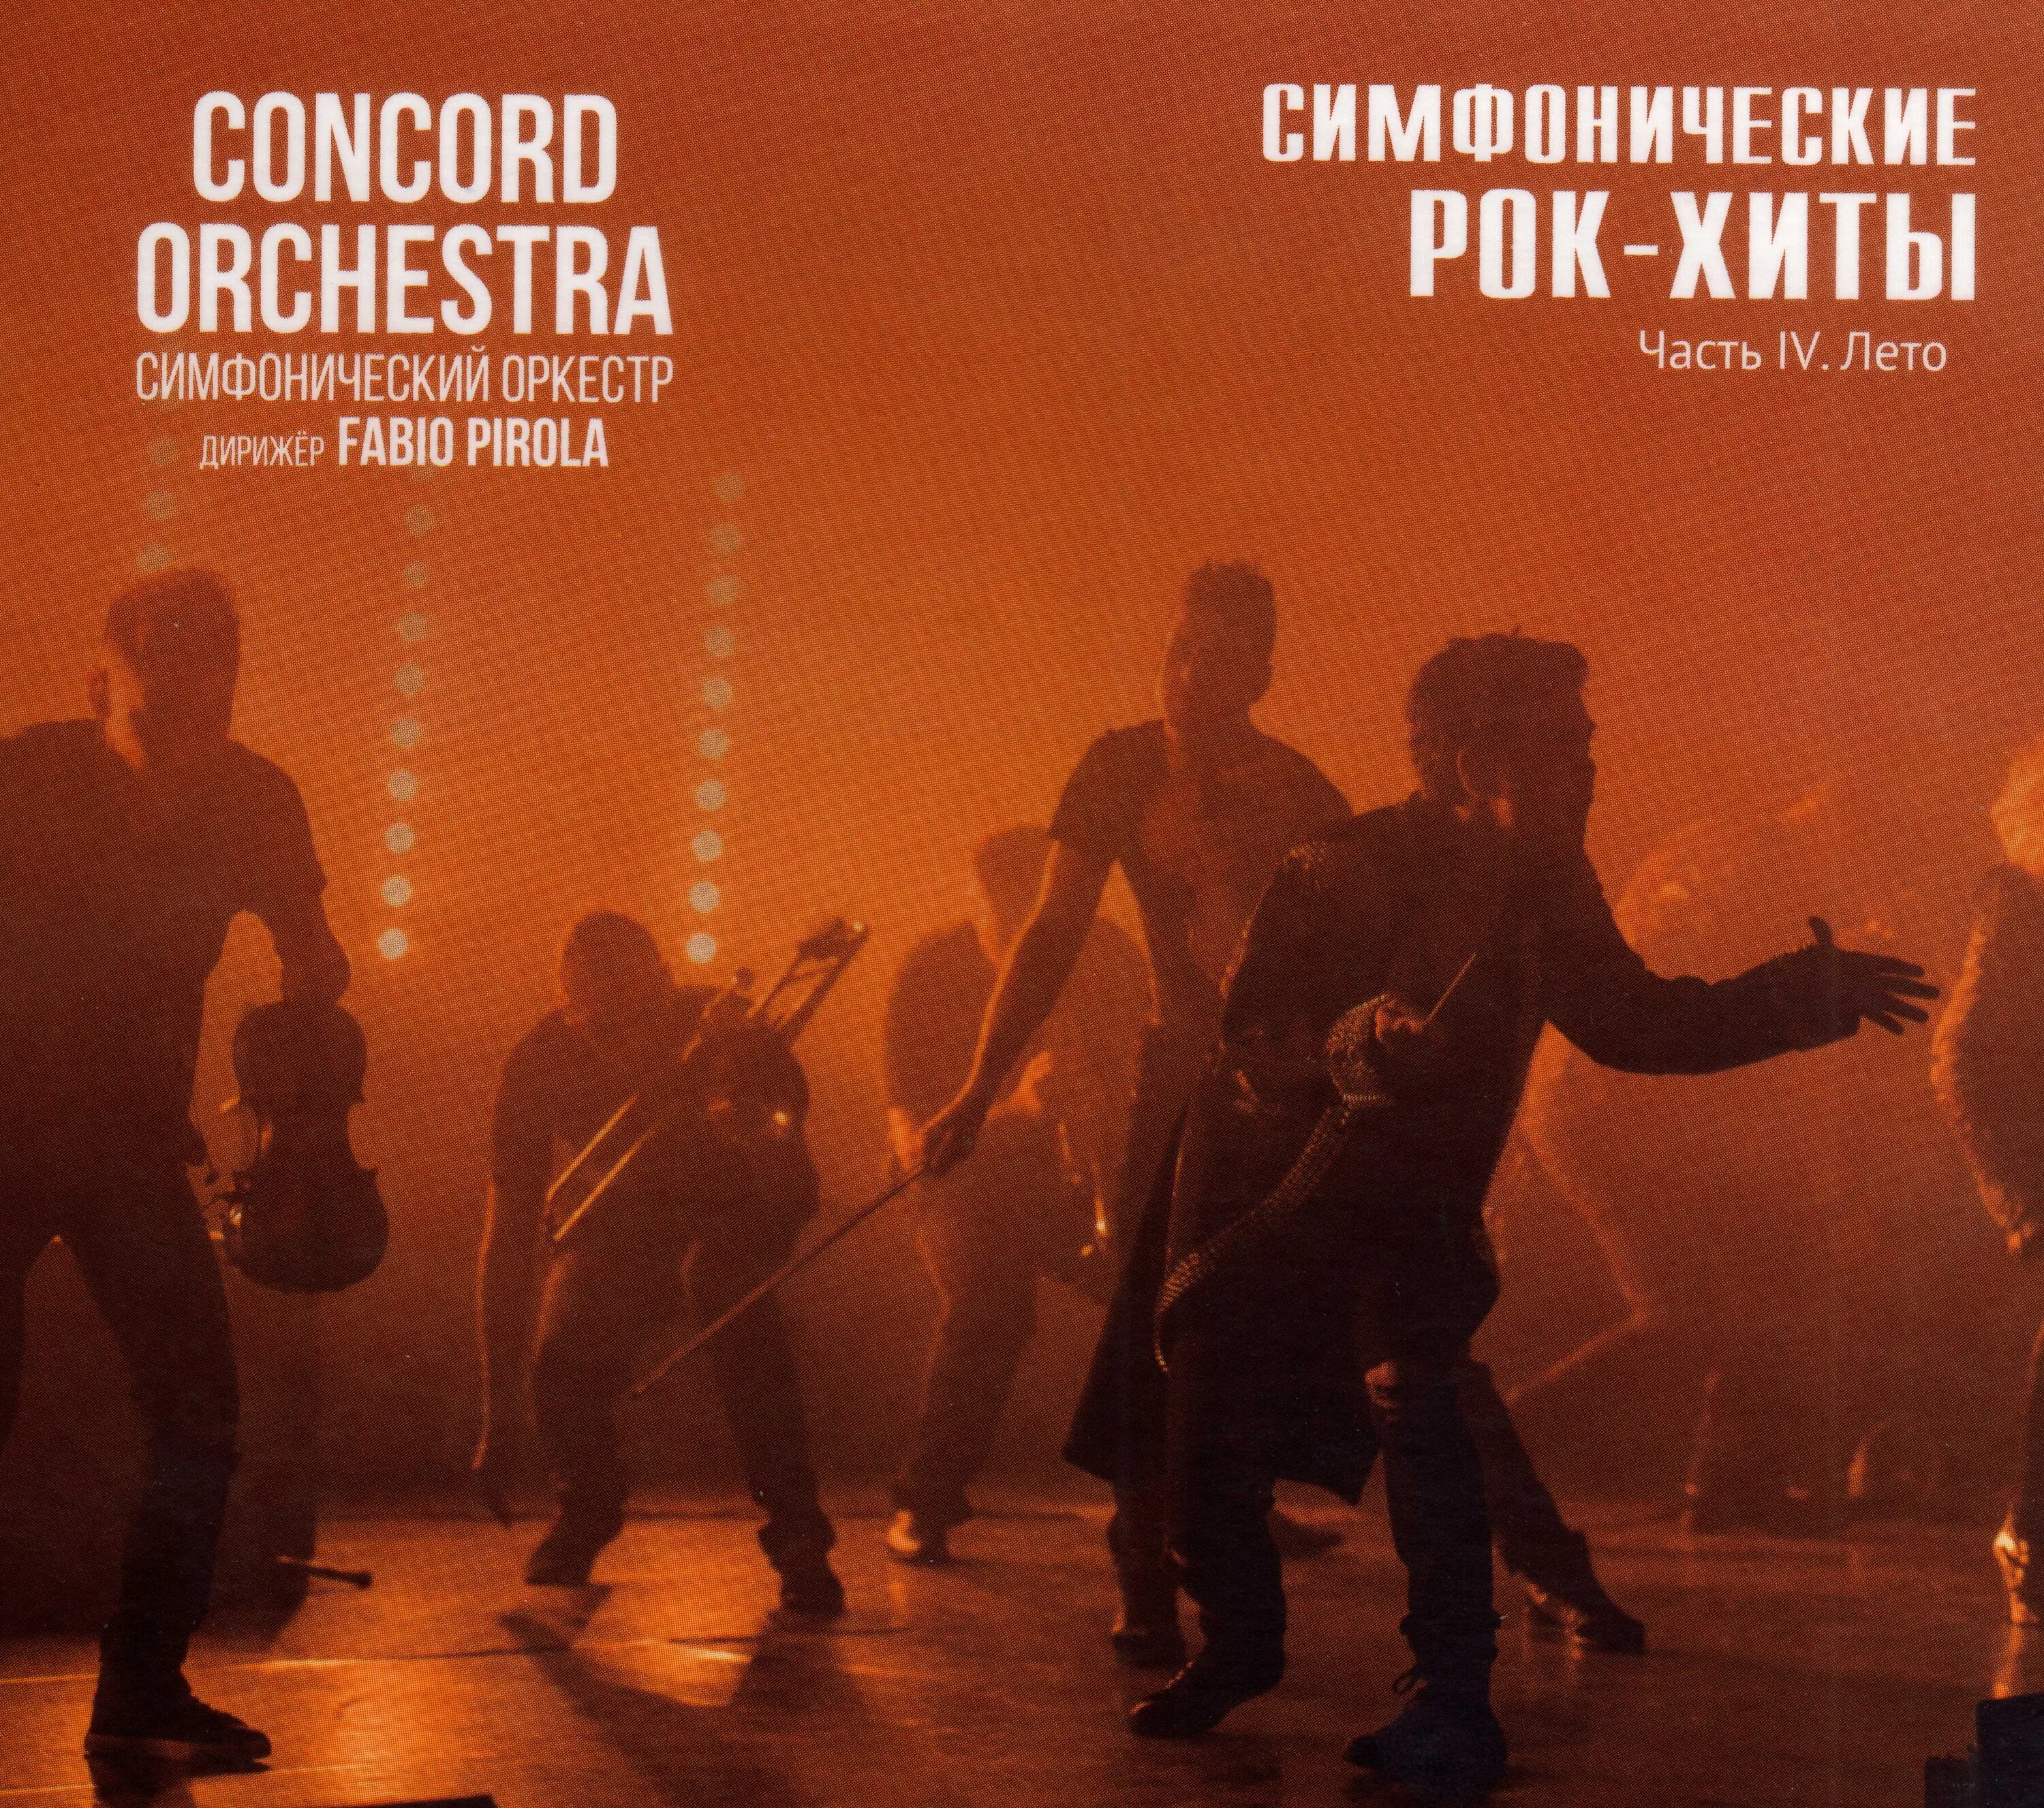 Concord Orchestra CD. Симфонические рок хиты. Рок оркестр. Нирвана симфонический оркестр.